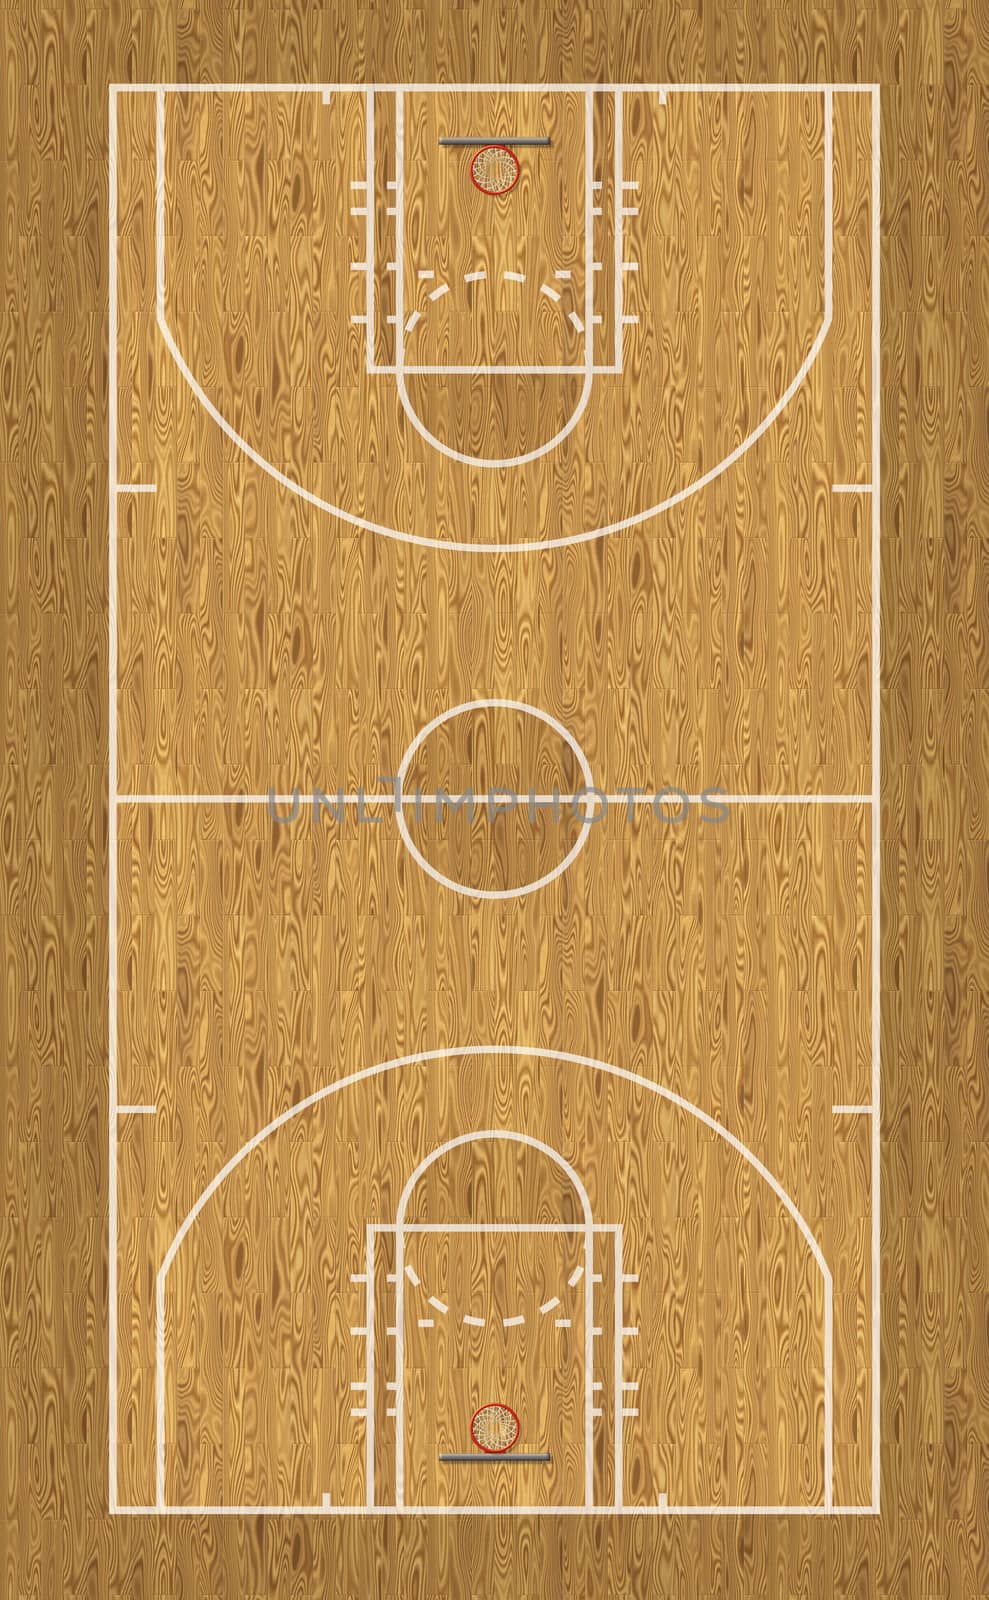 Digital illustration of a basketball court.